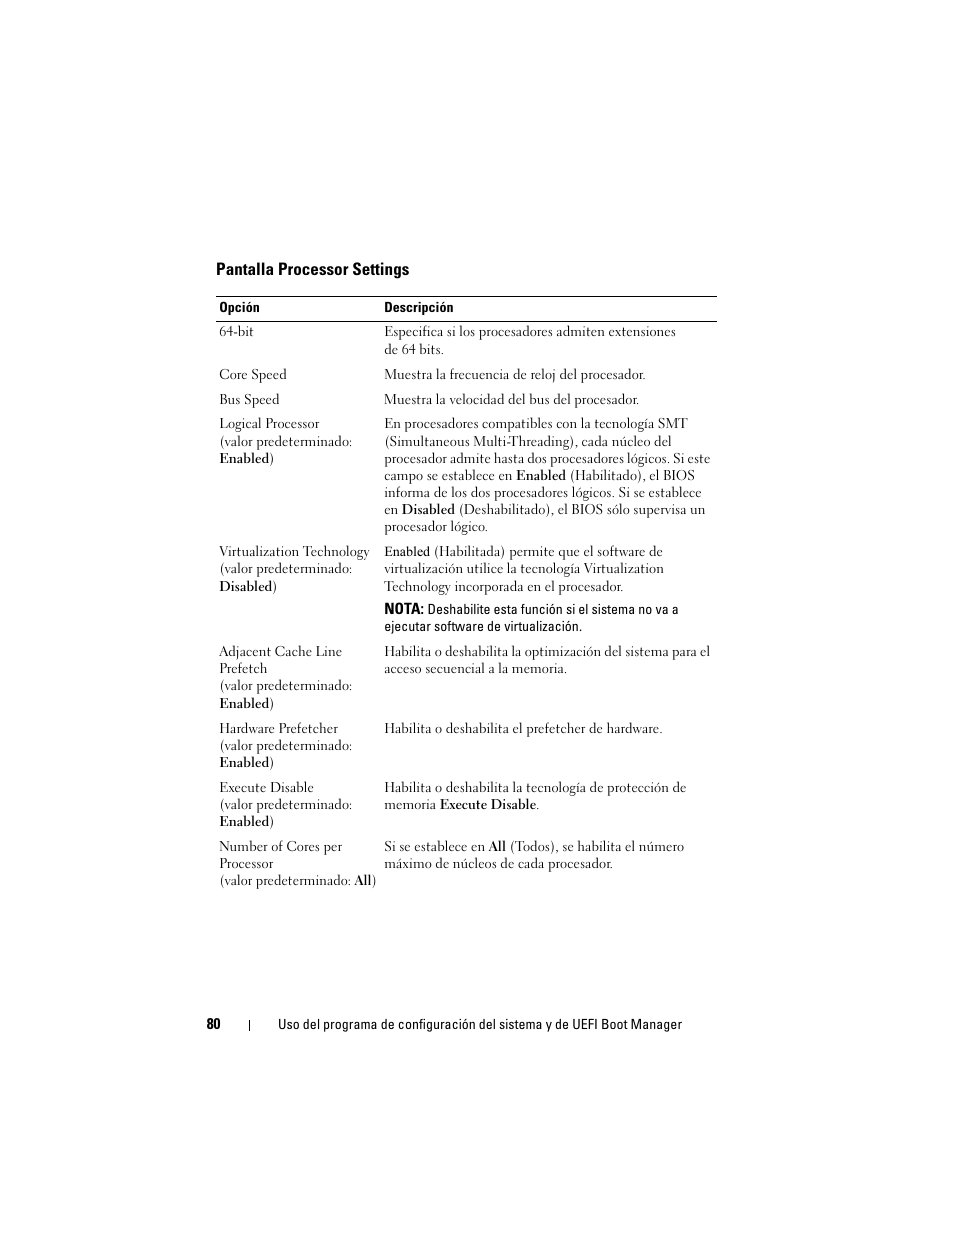 Pantalla processor settings | Dell PowerEdge R810 Manual del usuario | Página 80 / 238